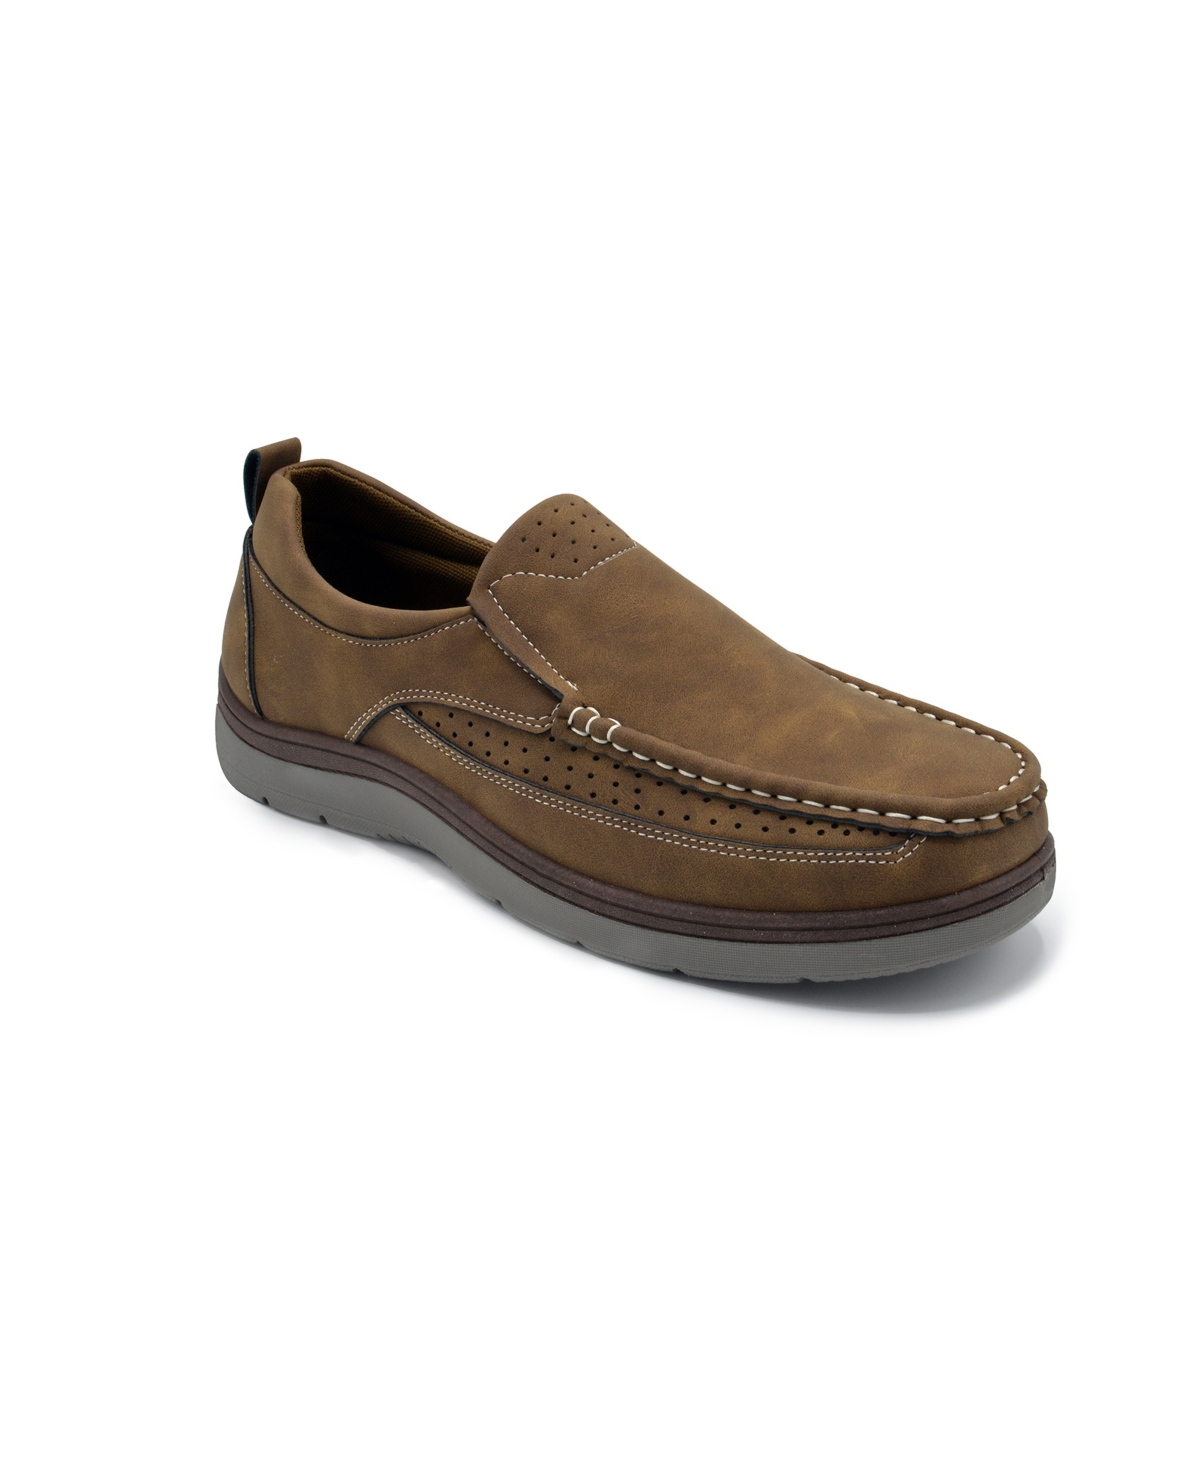 Men's Slip-On Walking Casual Shoes - Brown